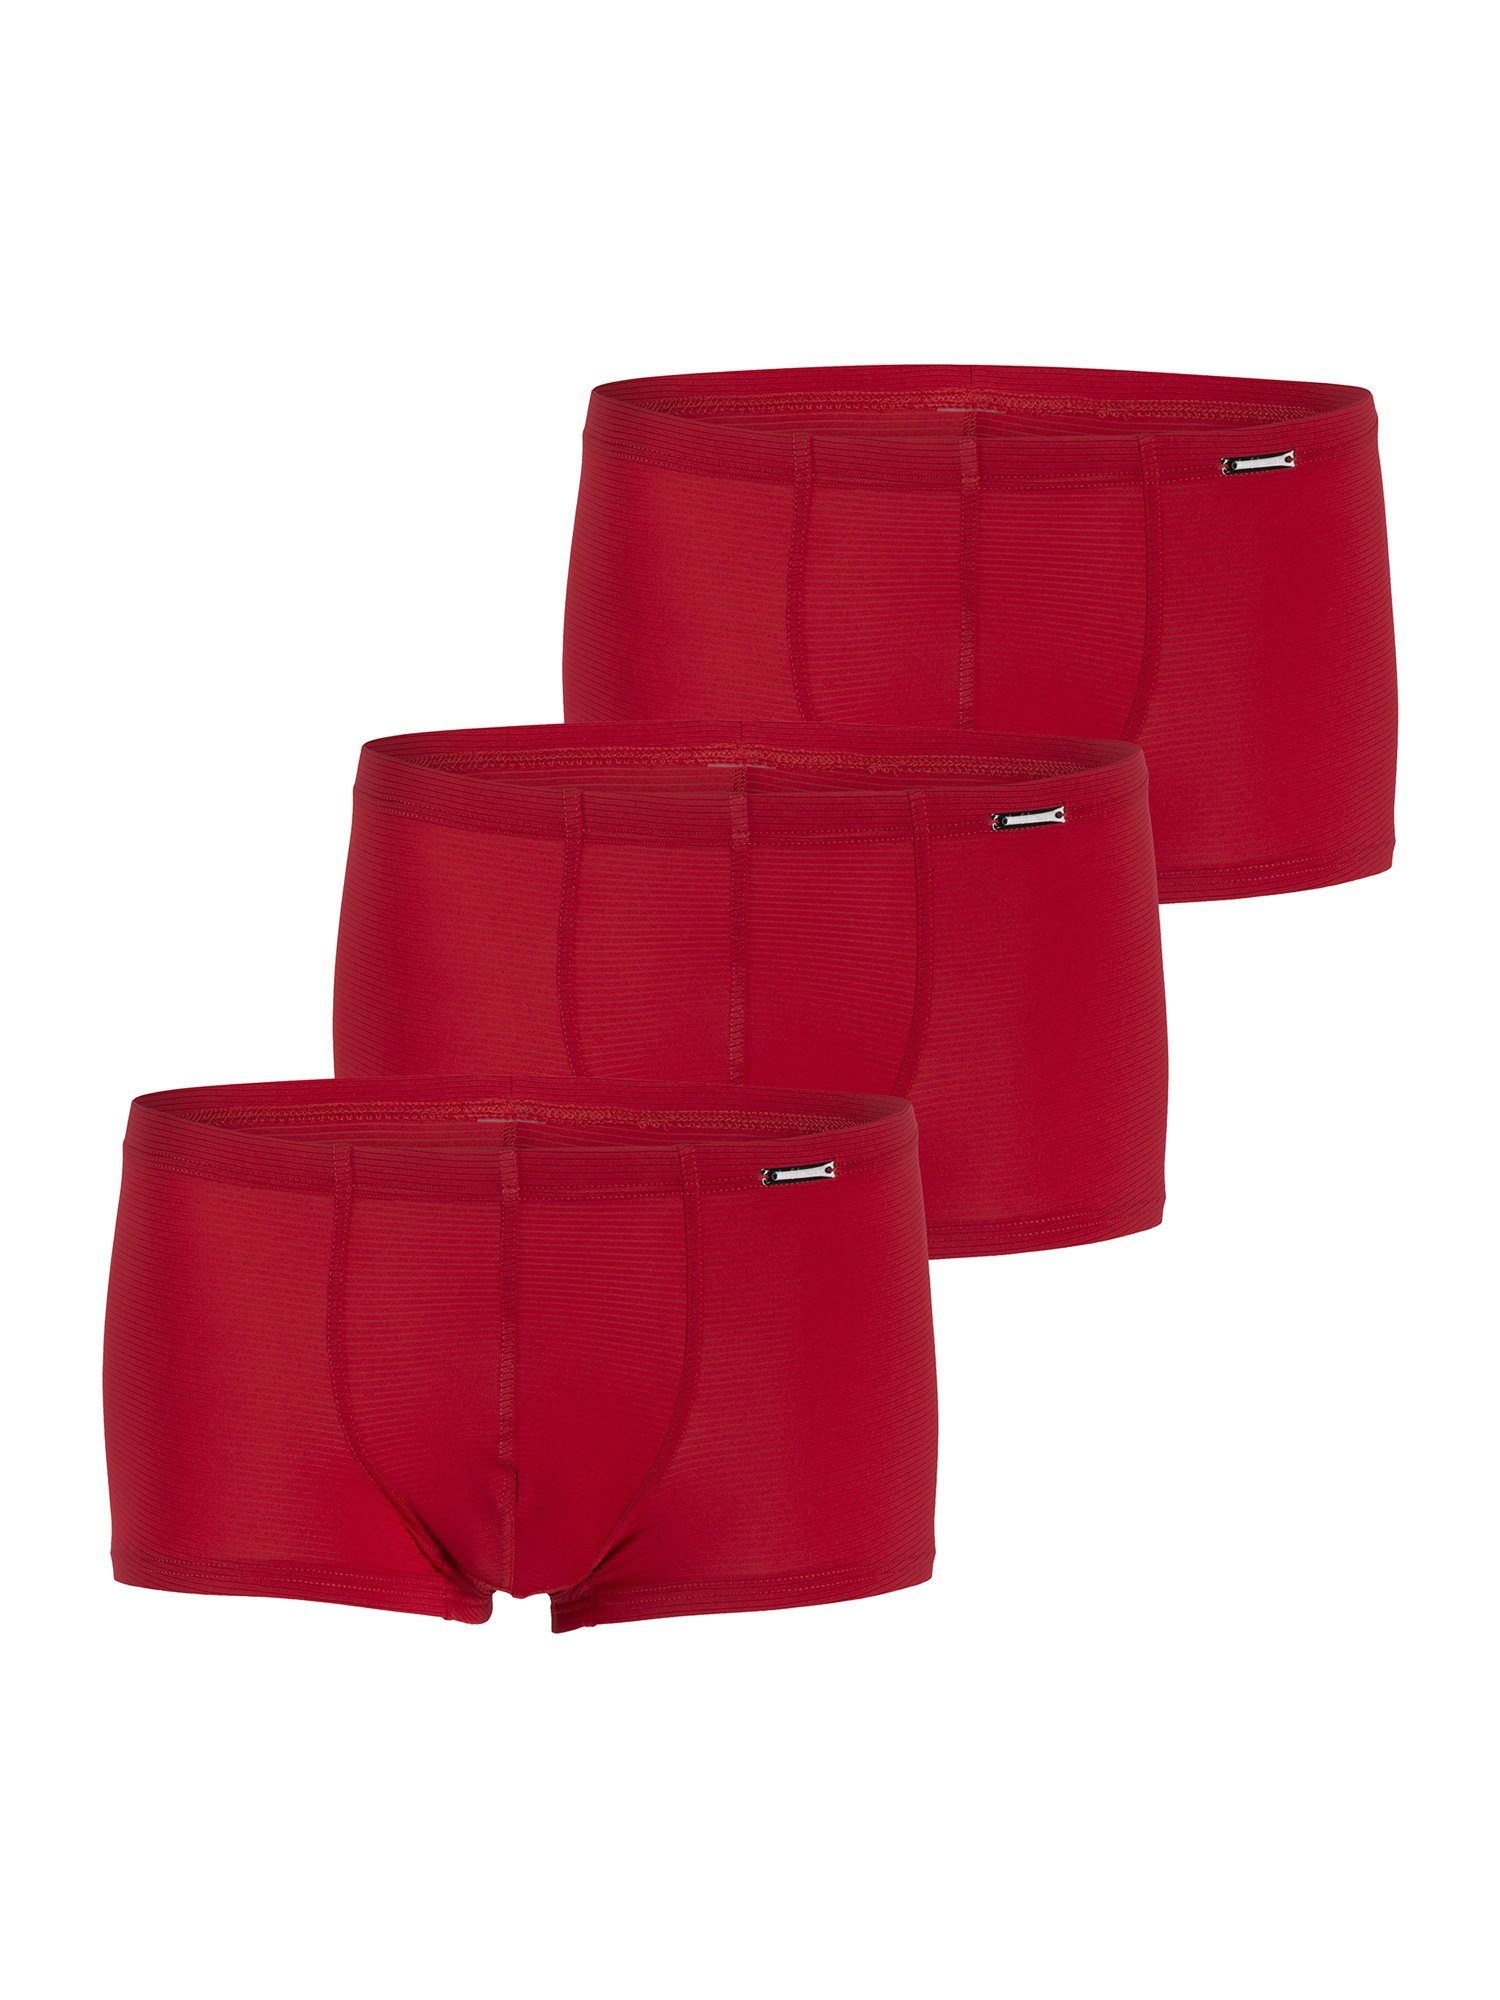 Olaf Benz Retro Pants RED1201 Minipants (3-St) Retro-Boxer Retro-shorts unterhose rot | Unterhosen